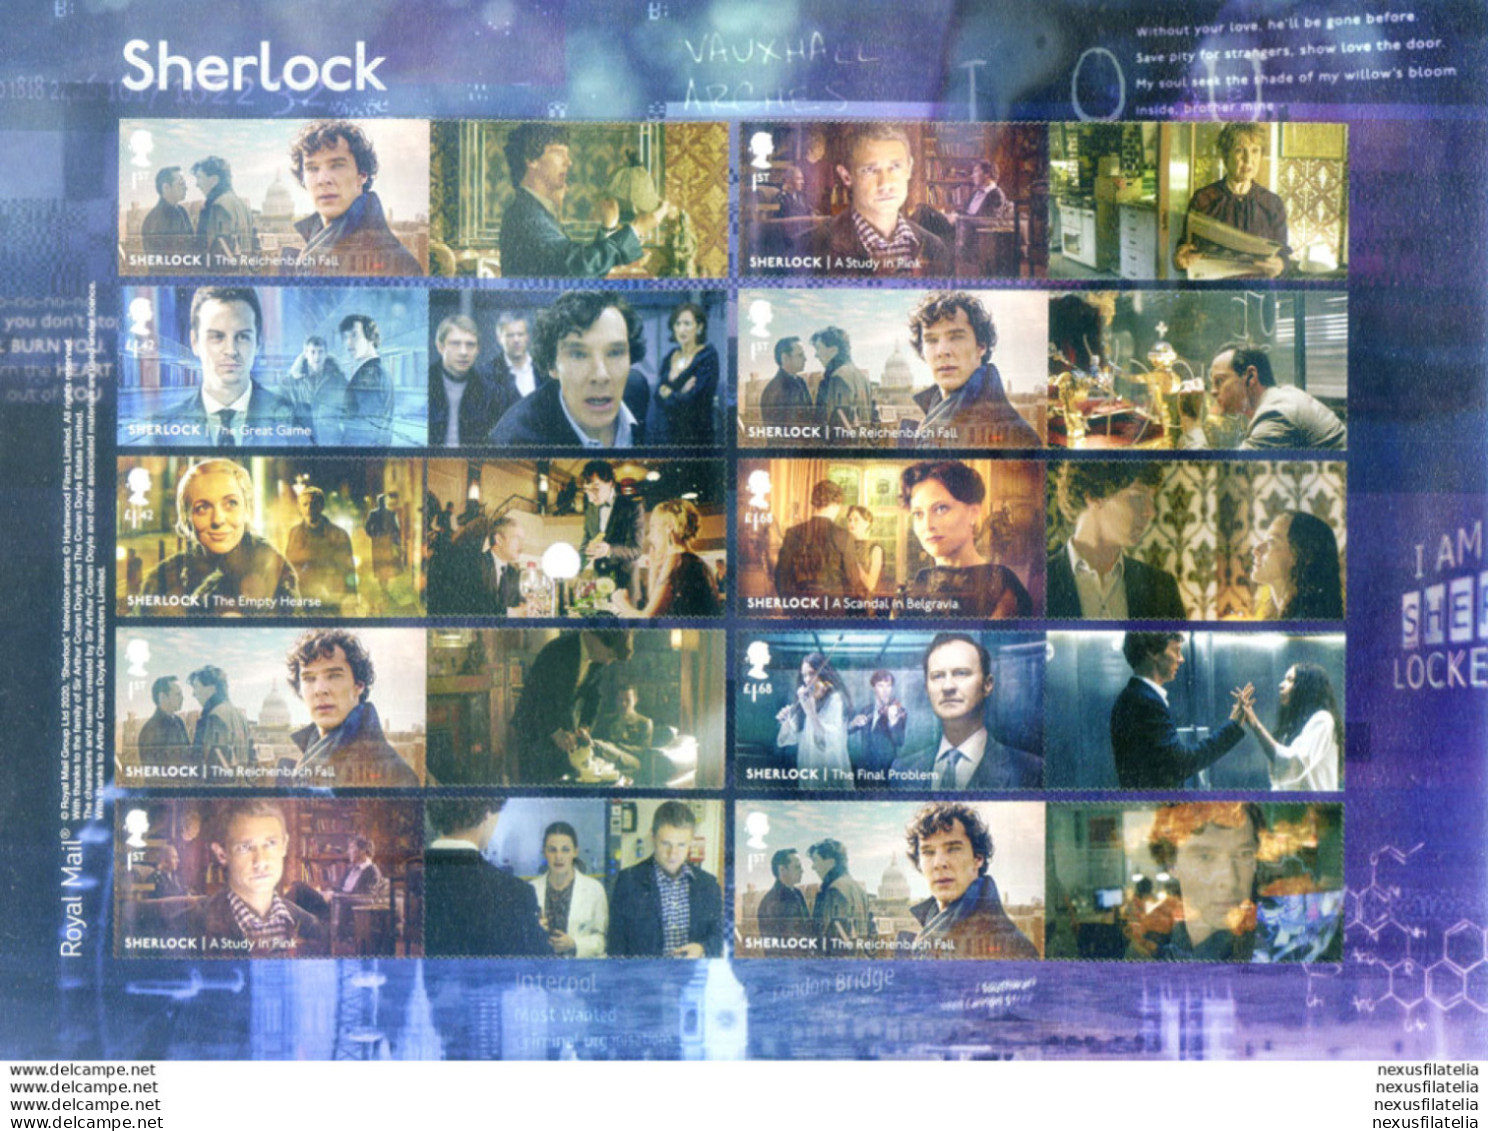 "Sherlock Holmes" 2020. - Blocks & Kleinbögen